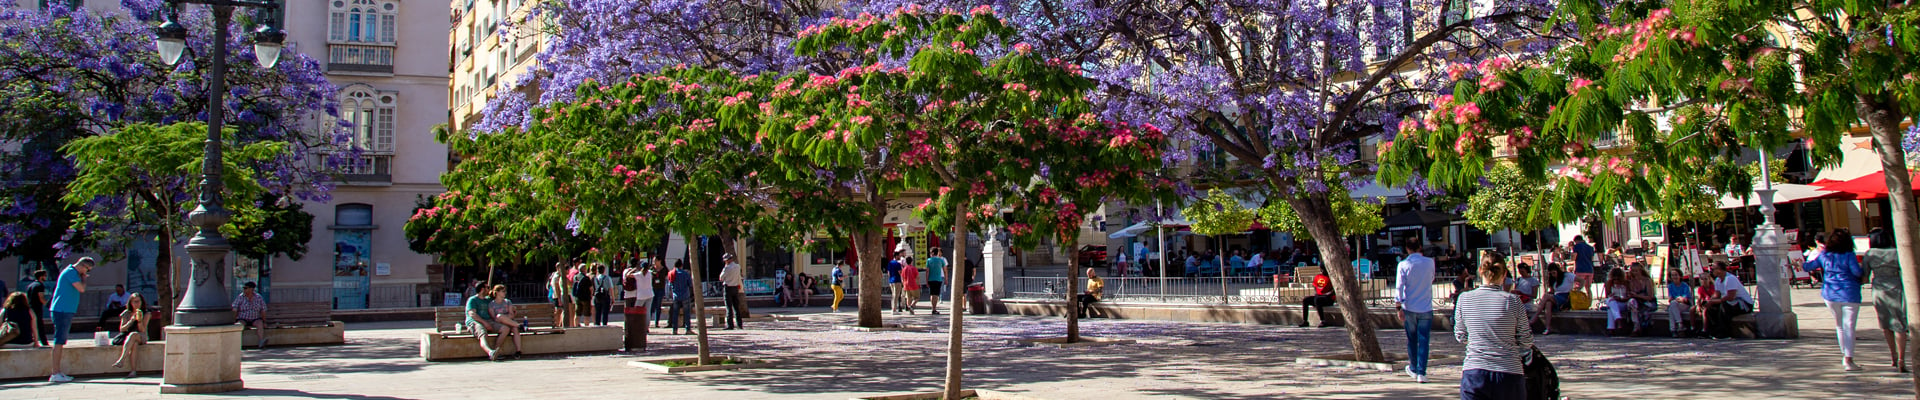 Plaza de La Merced in Malaga, Spain